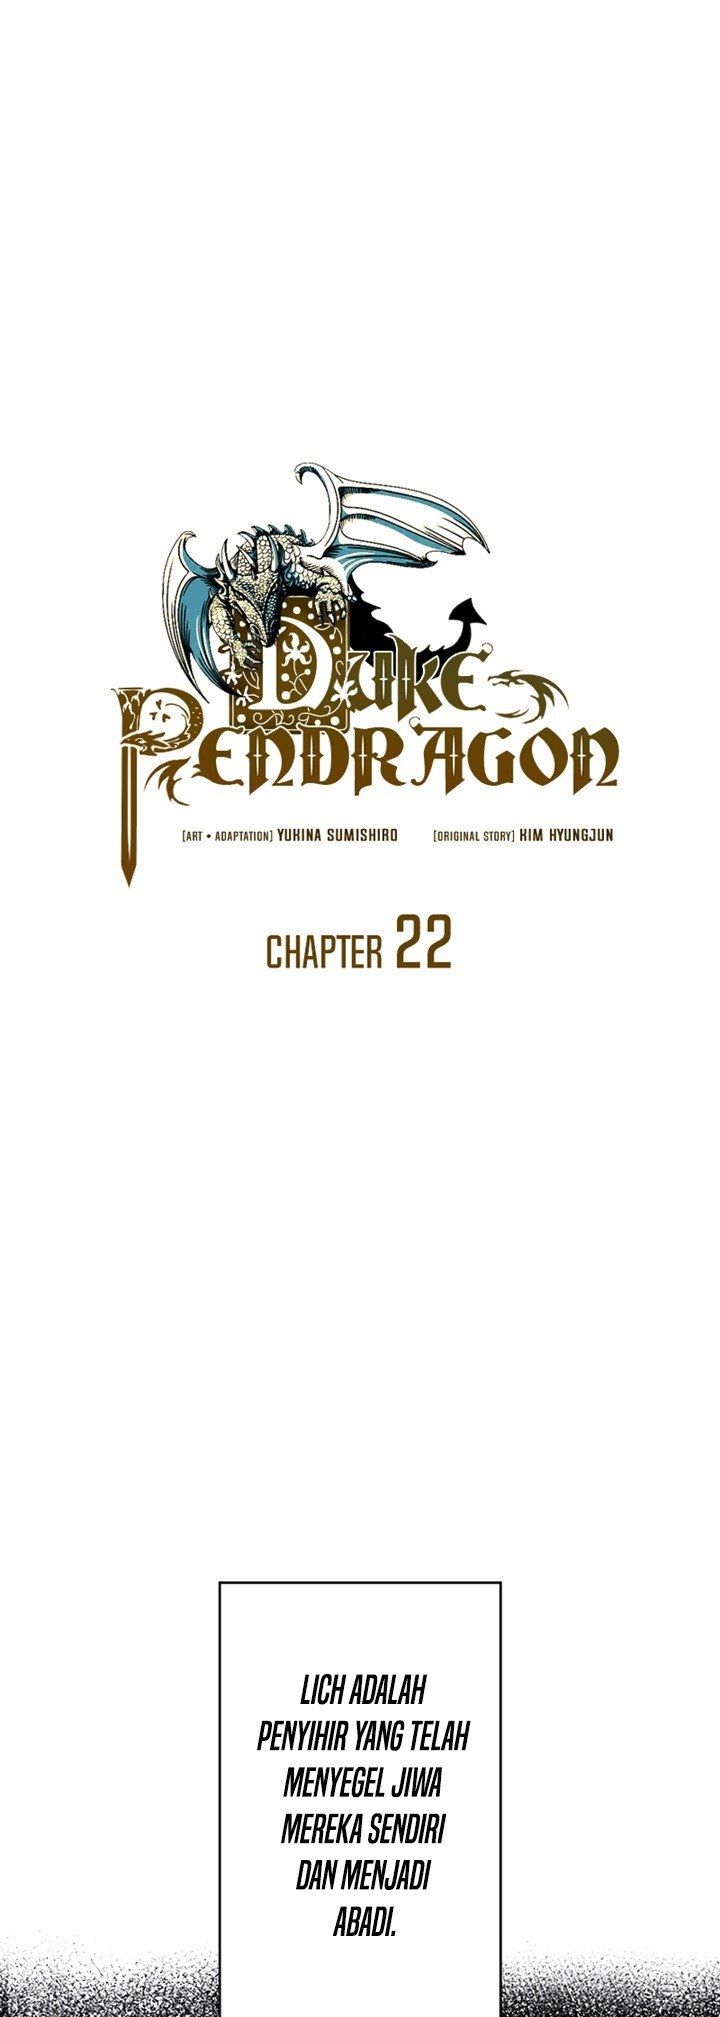 White Dragon Duke: Pendragon Chapter 22